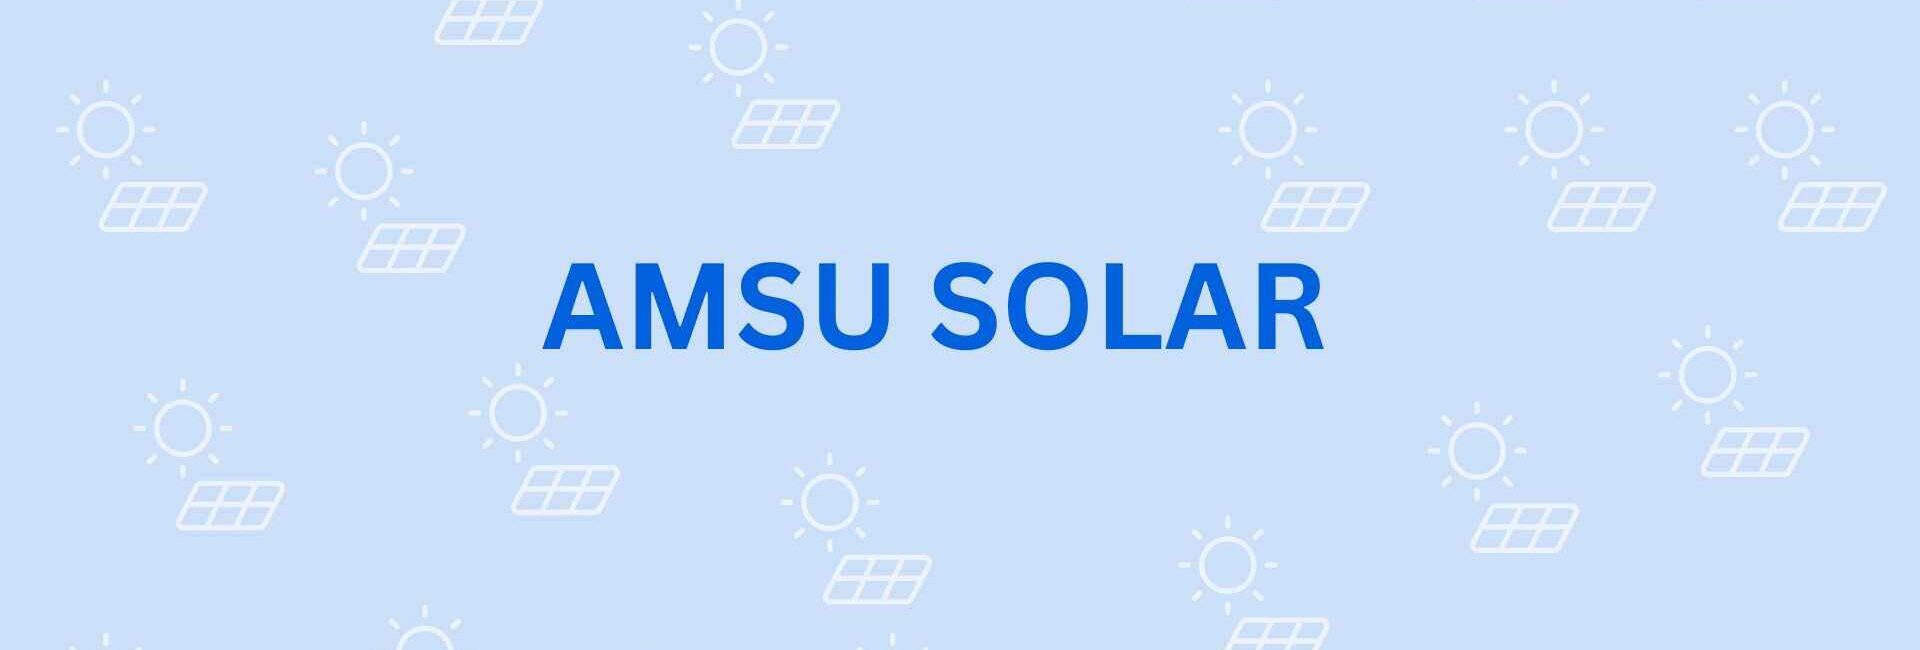 AMSU SOLAR - Best Solar System Dealer in Noida